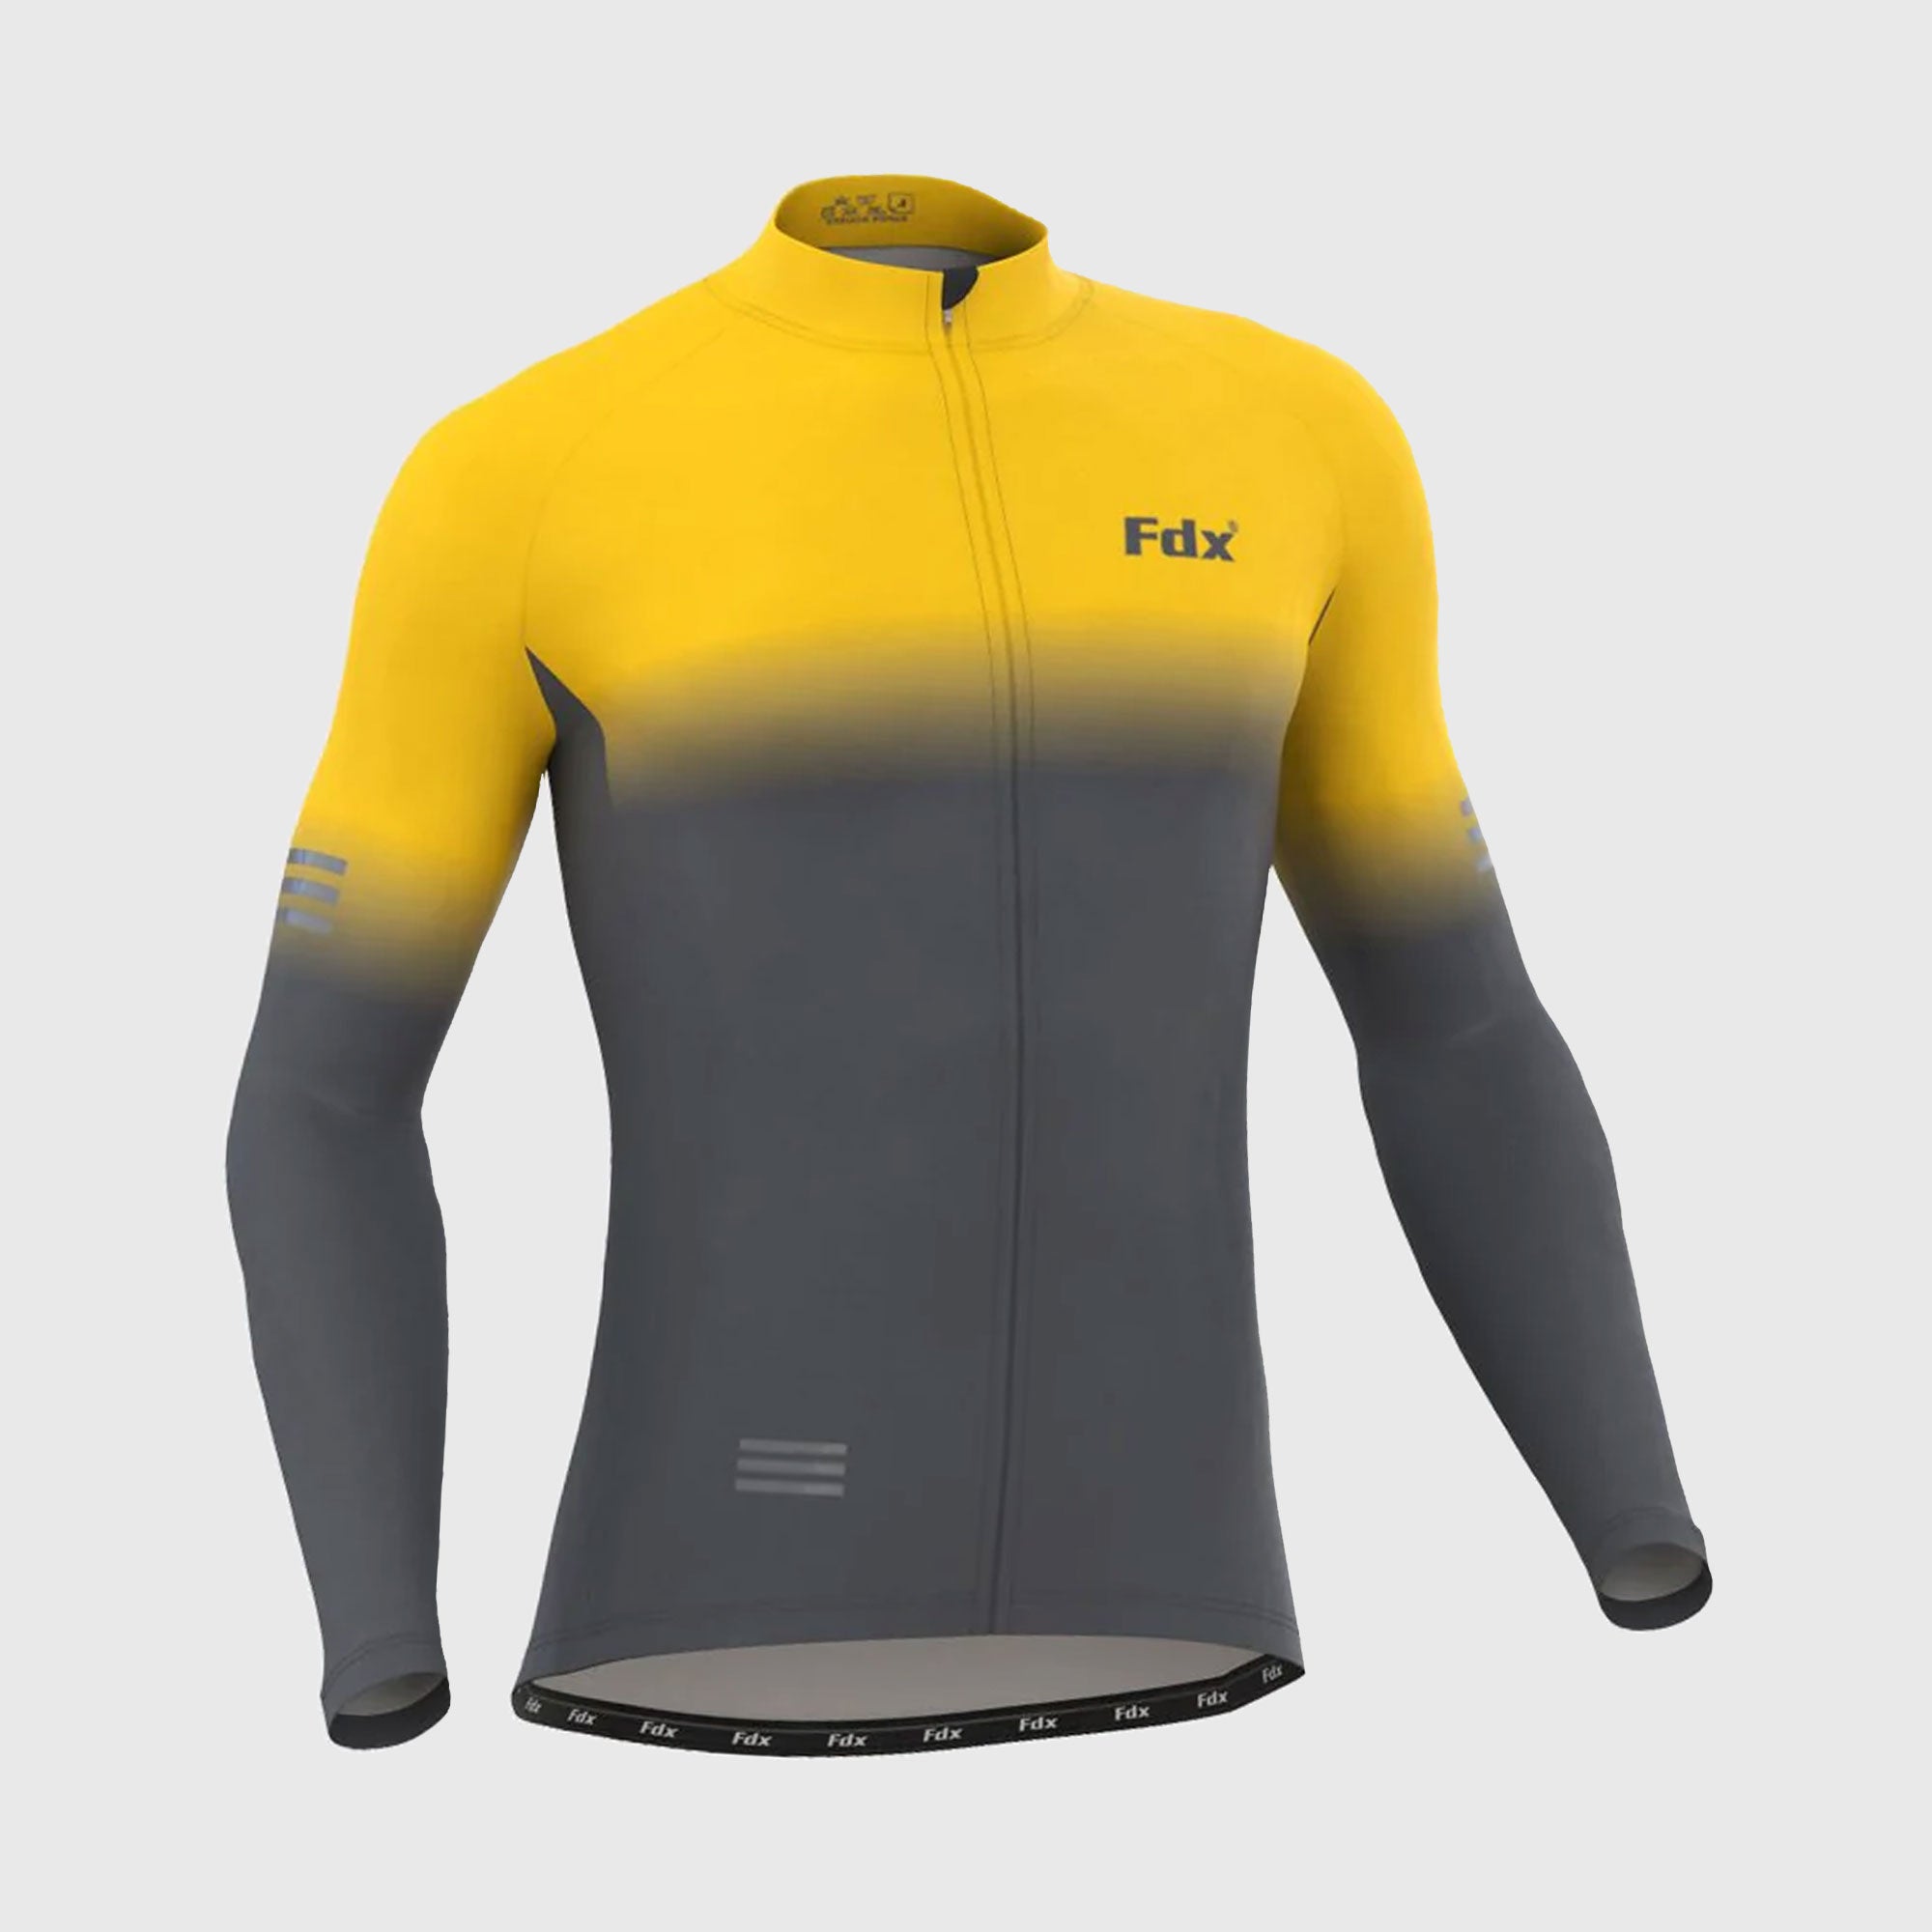 Fdx Mens Yellow Long Sleeve Cycling Jersey for Winter Roubaix Thermal Fleece Road Bike Wear Top Full Zipper, Pockets & Hi-viz Reflectors - Duo